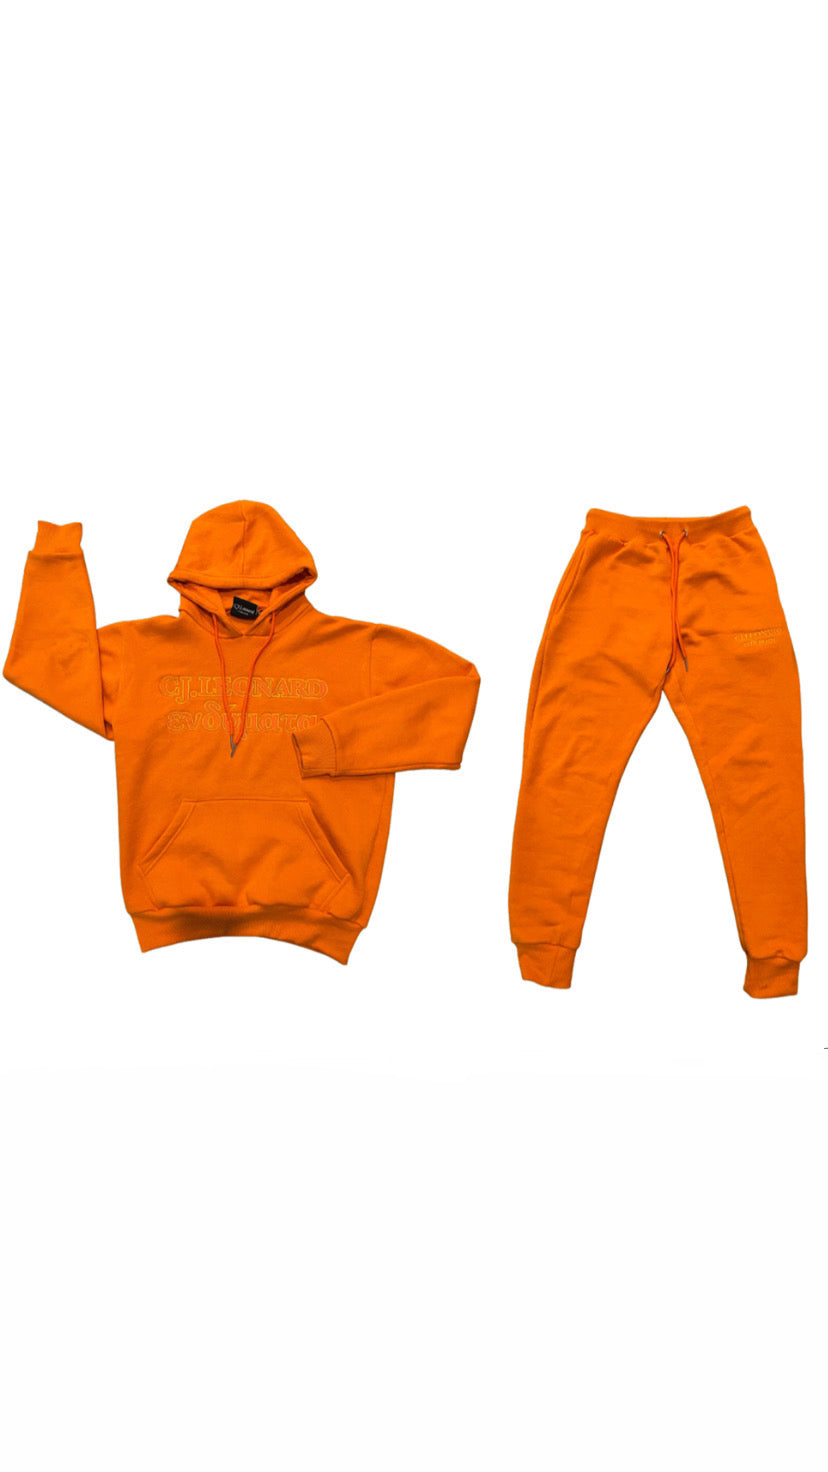 Orange Sweatsuit